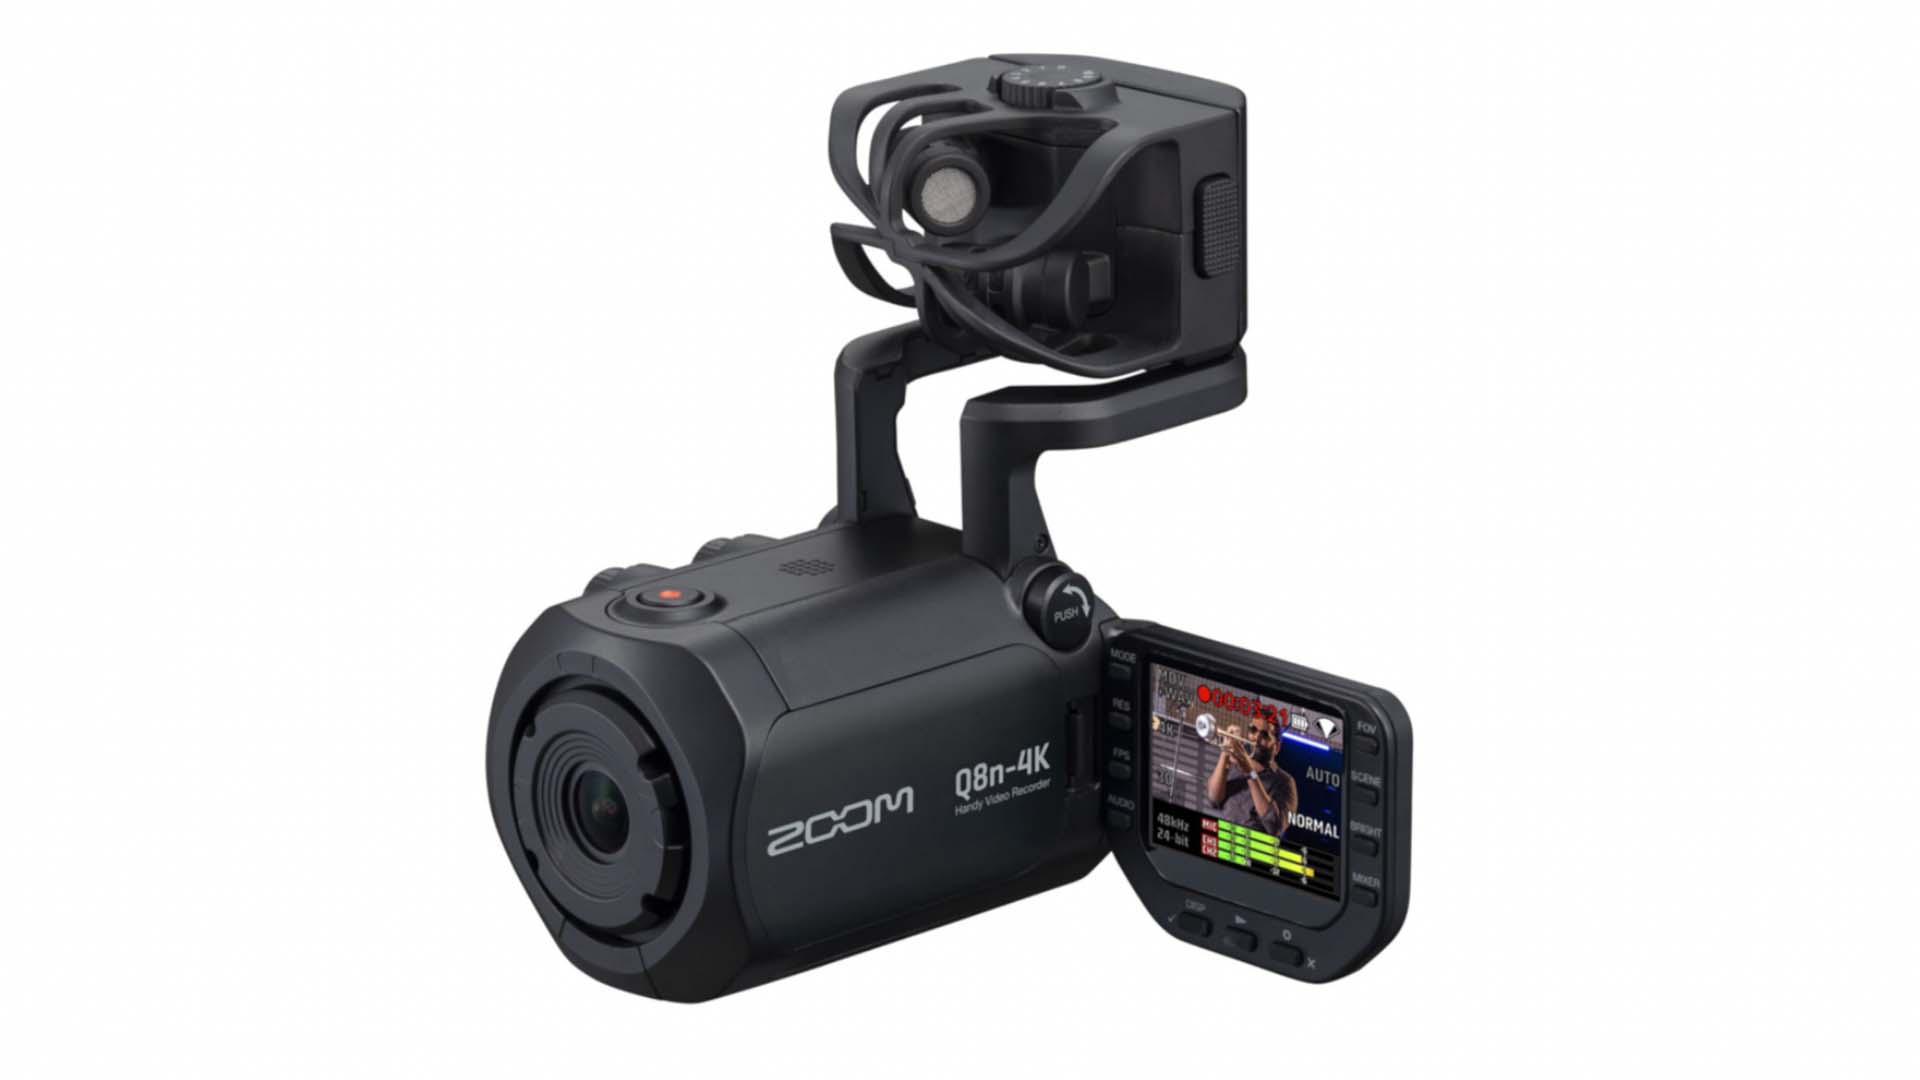 The Zoom Q8n-4K camera. Image: Zoom.